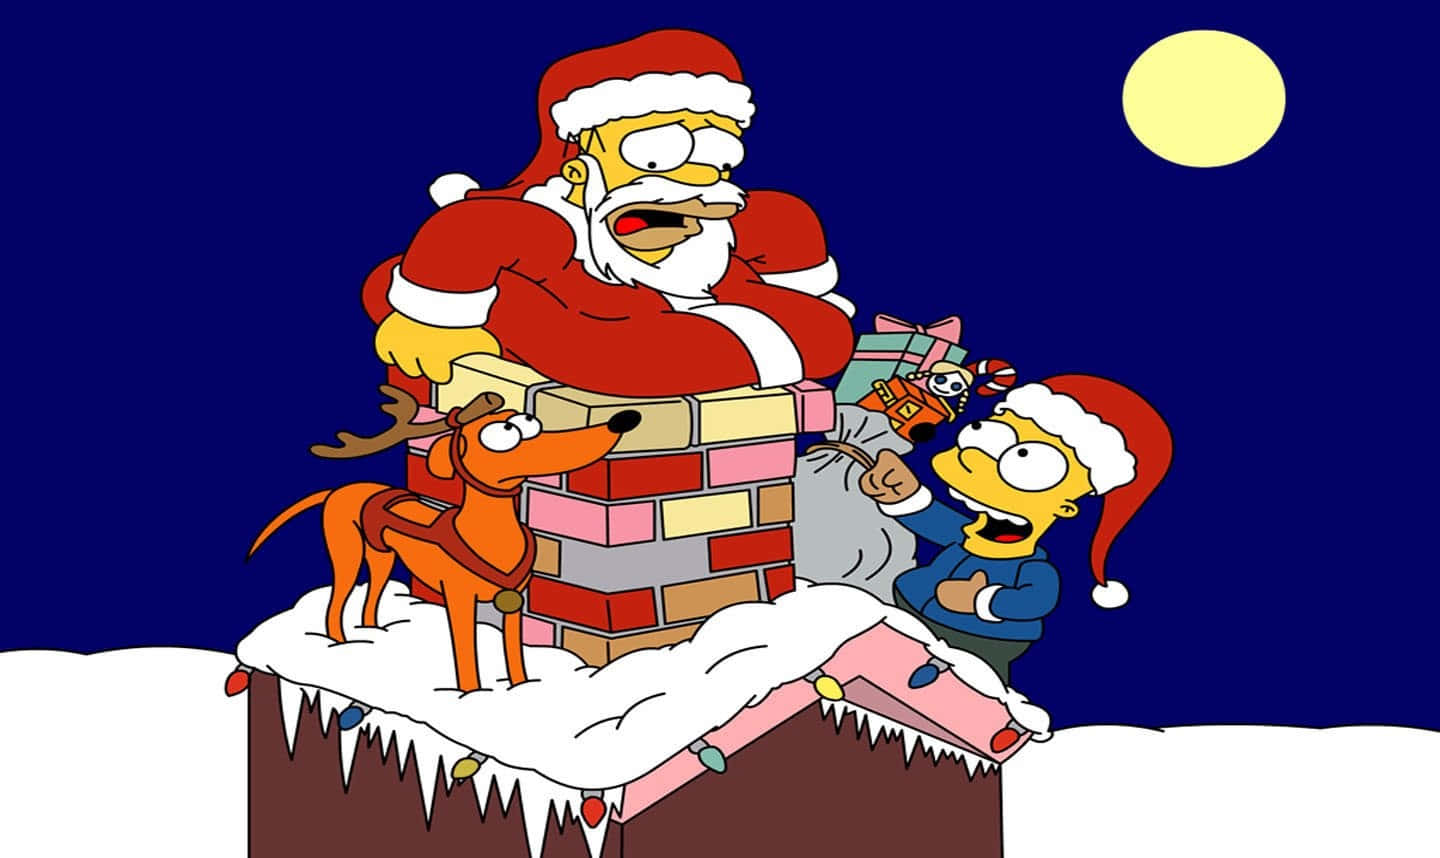 A Cheerful Santa Riding a Roaring T-Rex in a Snowy Christmas Setting